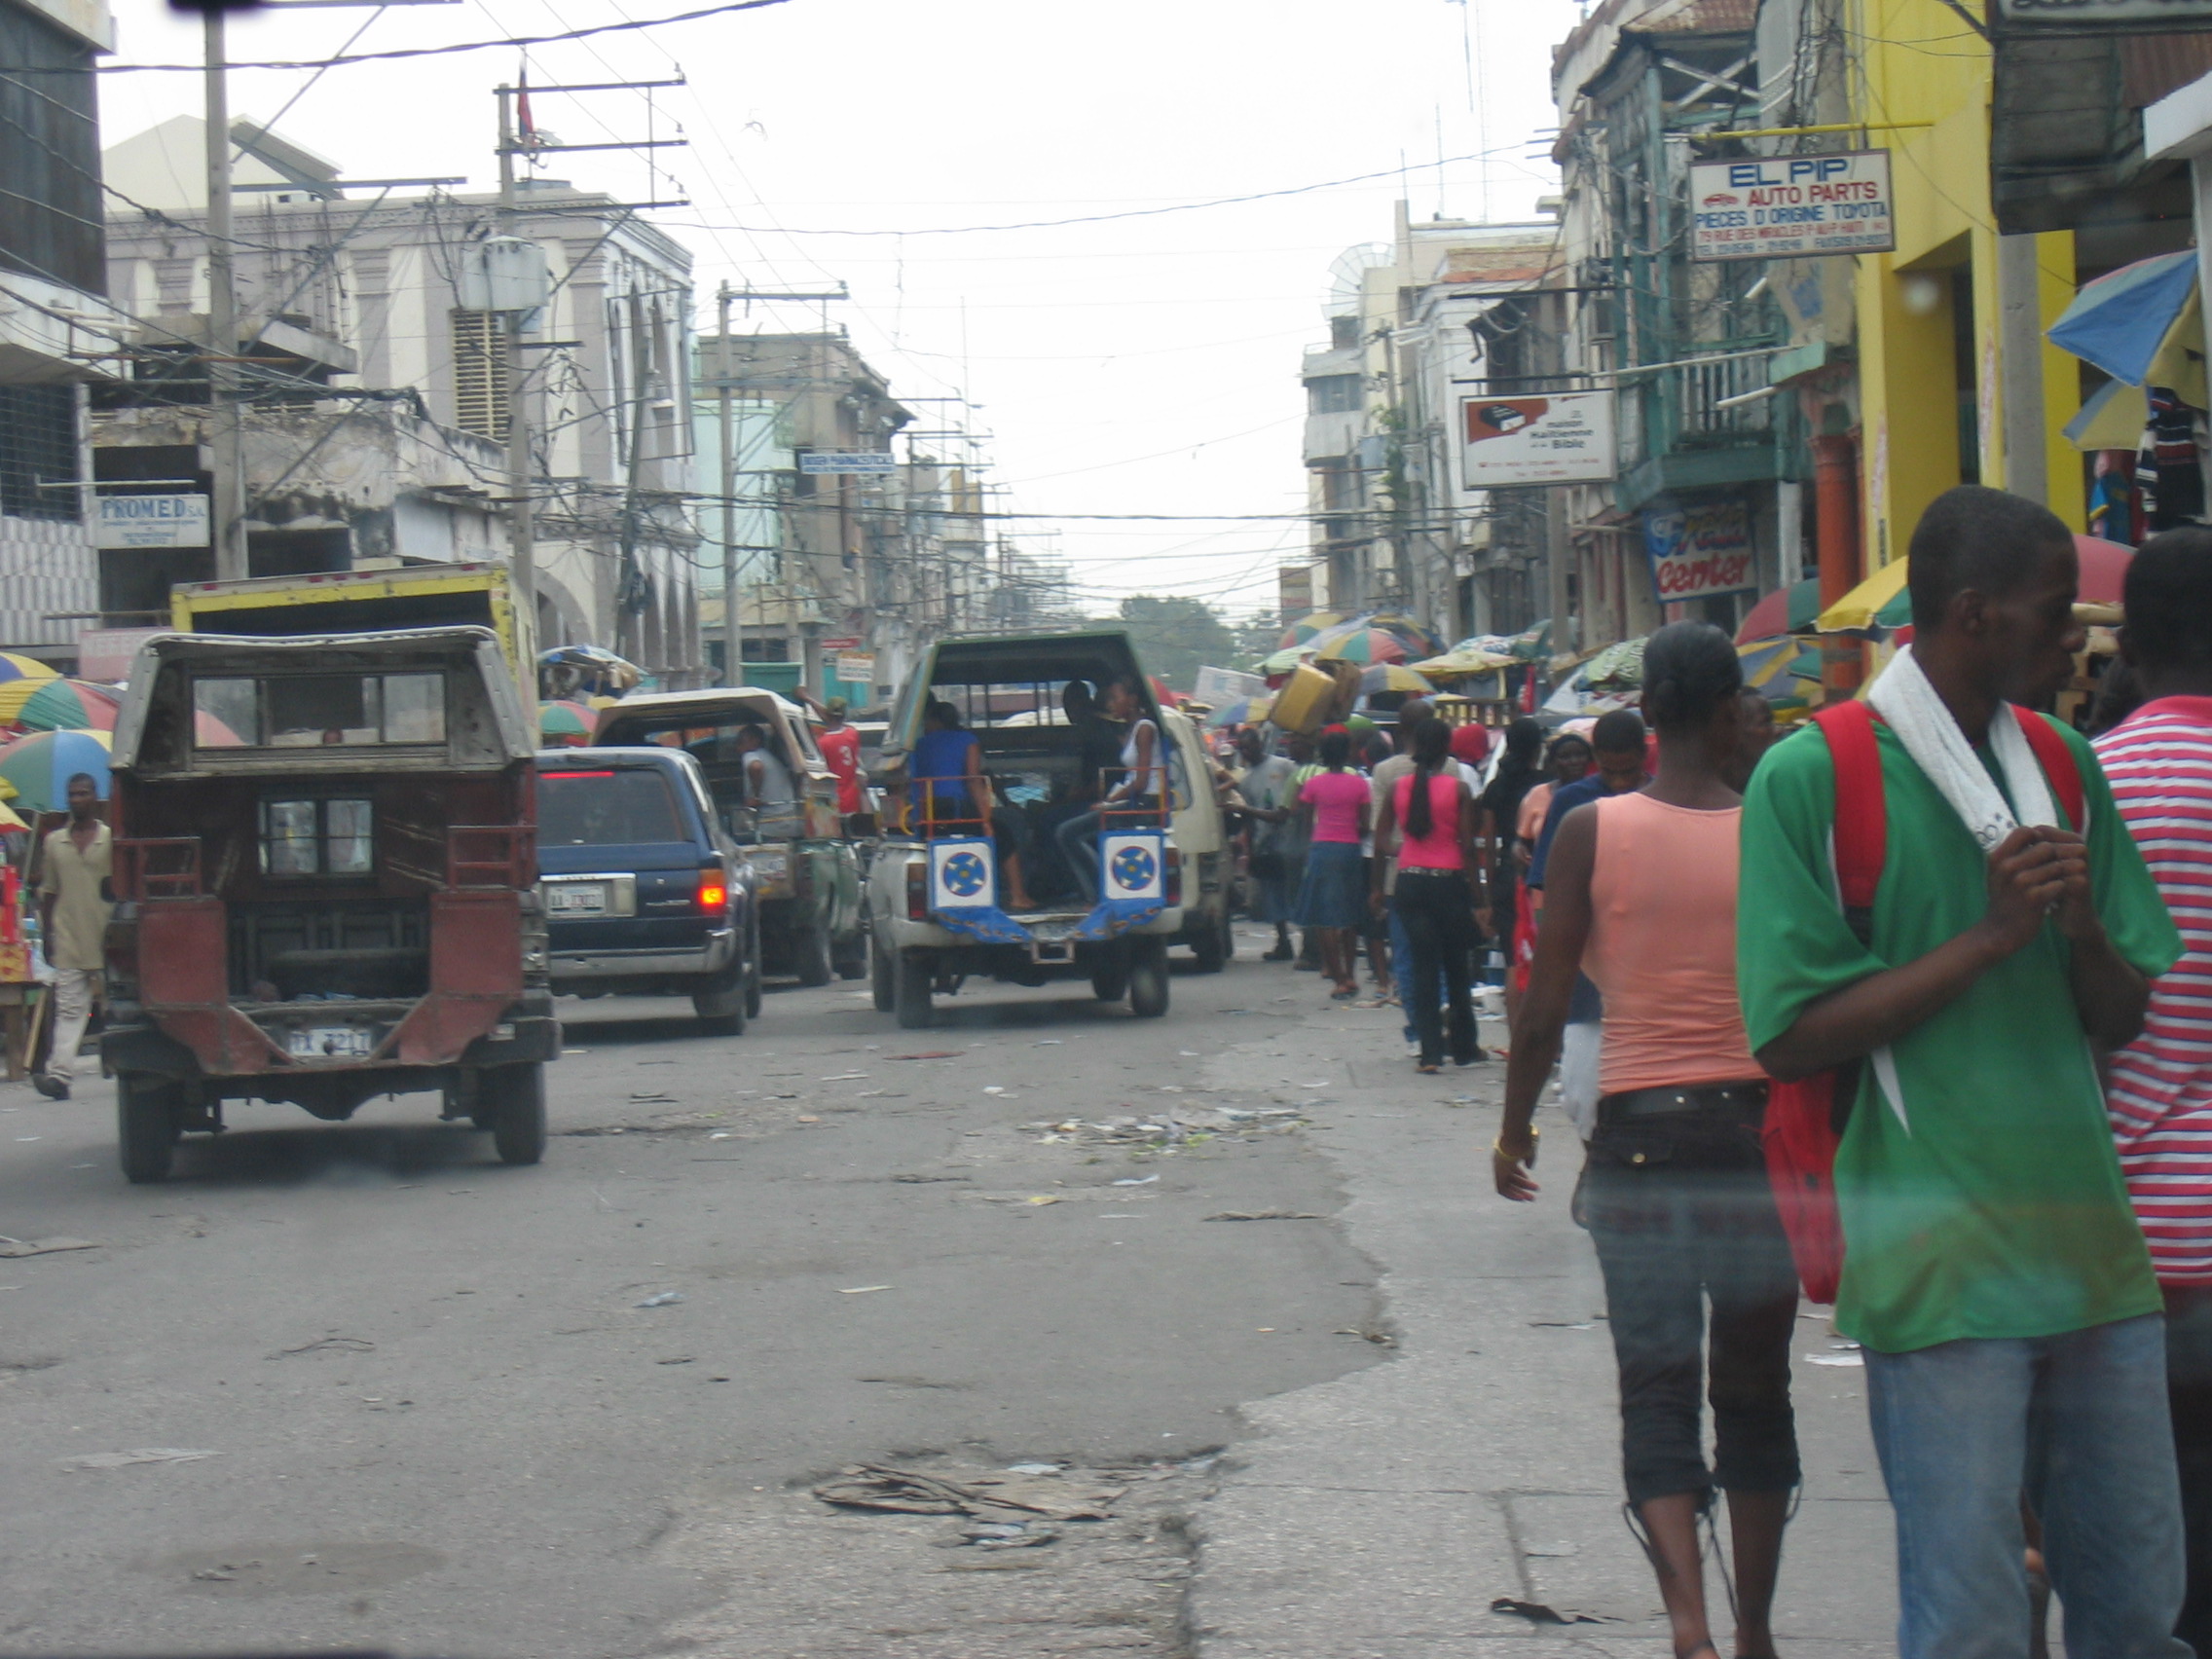  Downtown Port-au-Prince. 